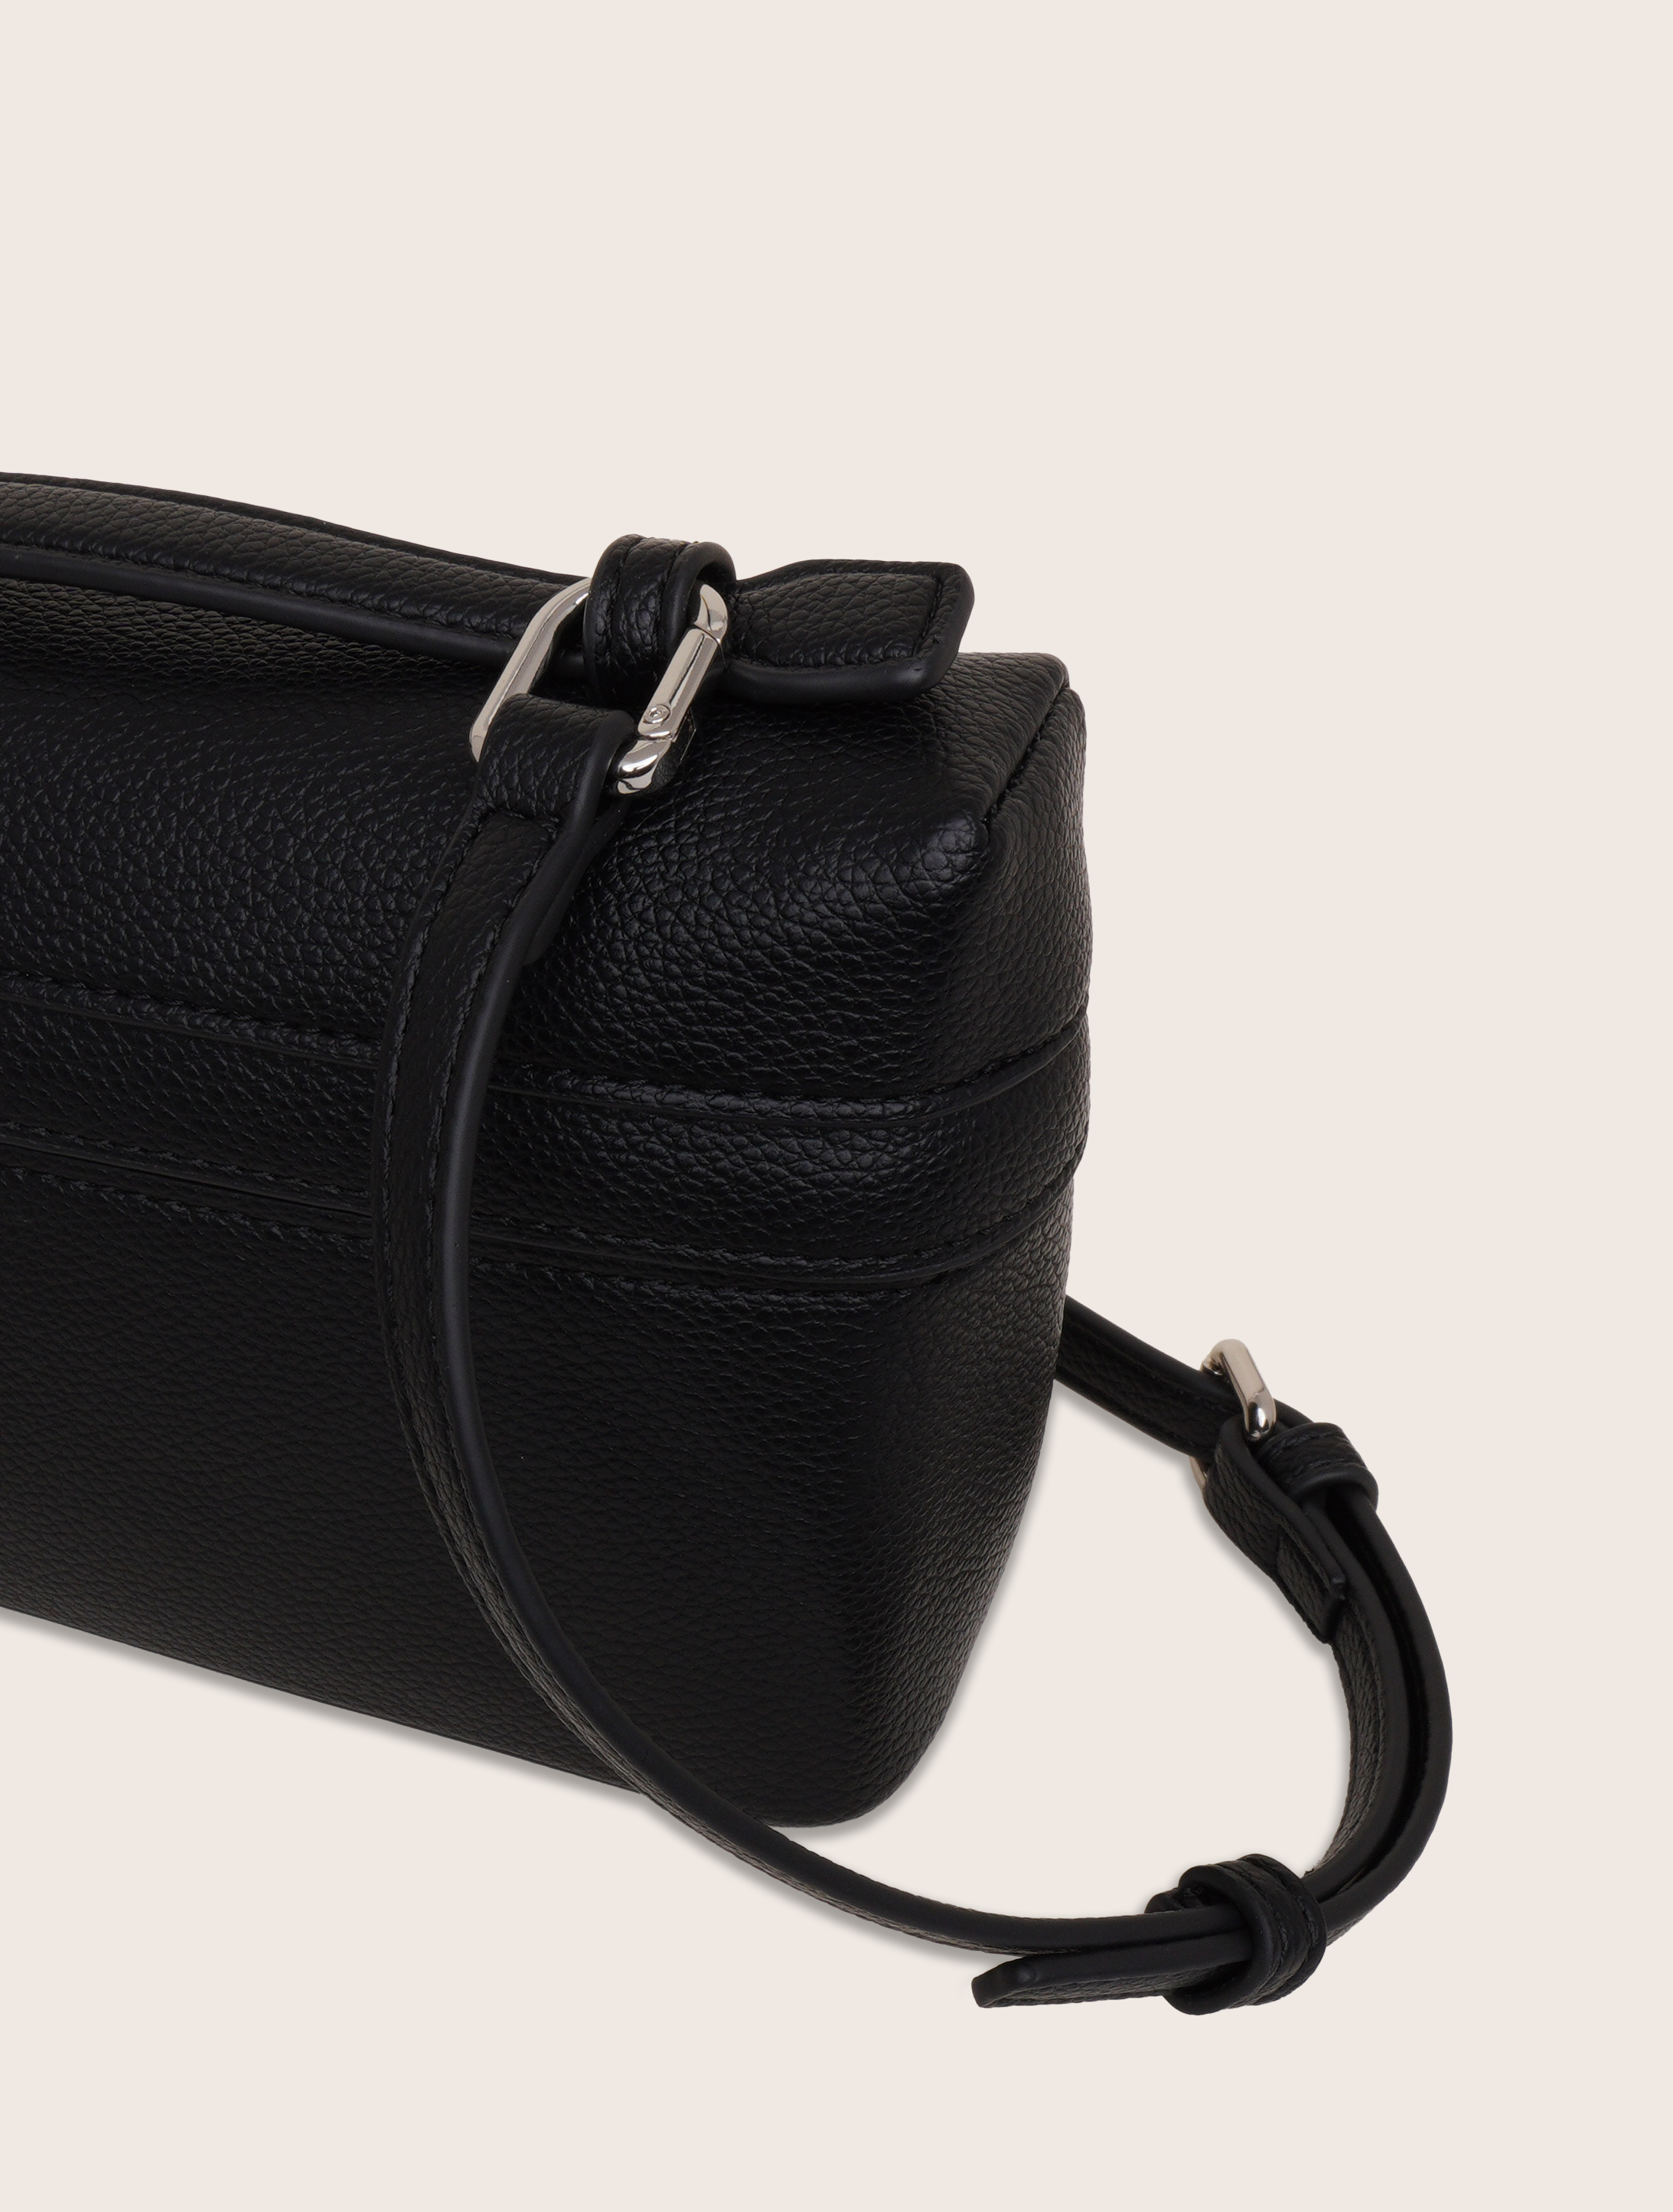 bag-black-strap